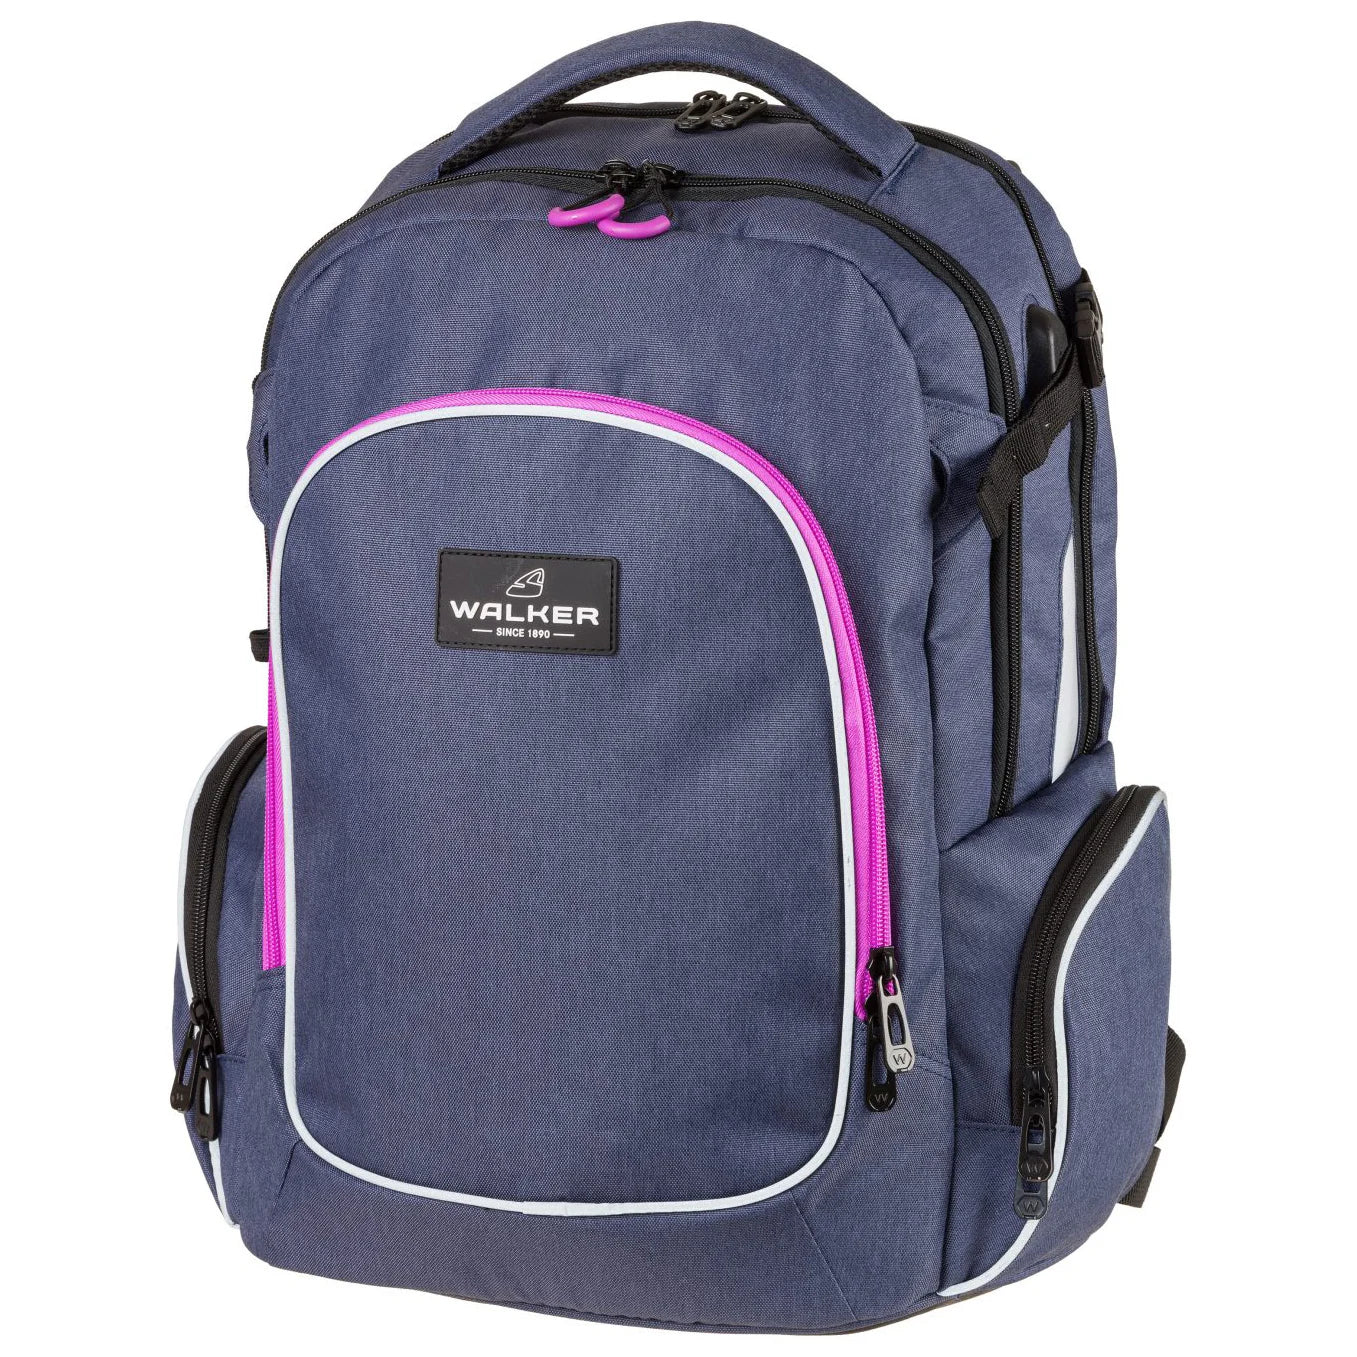 Walker Bags Campus Evo Rucksack 46 cm - Blue Ivy Pink